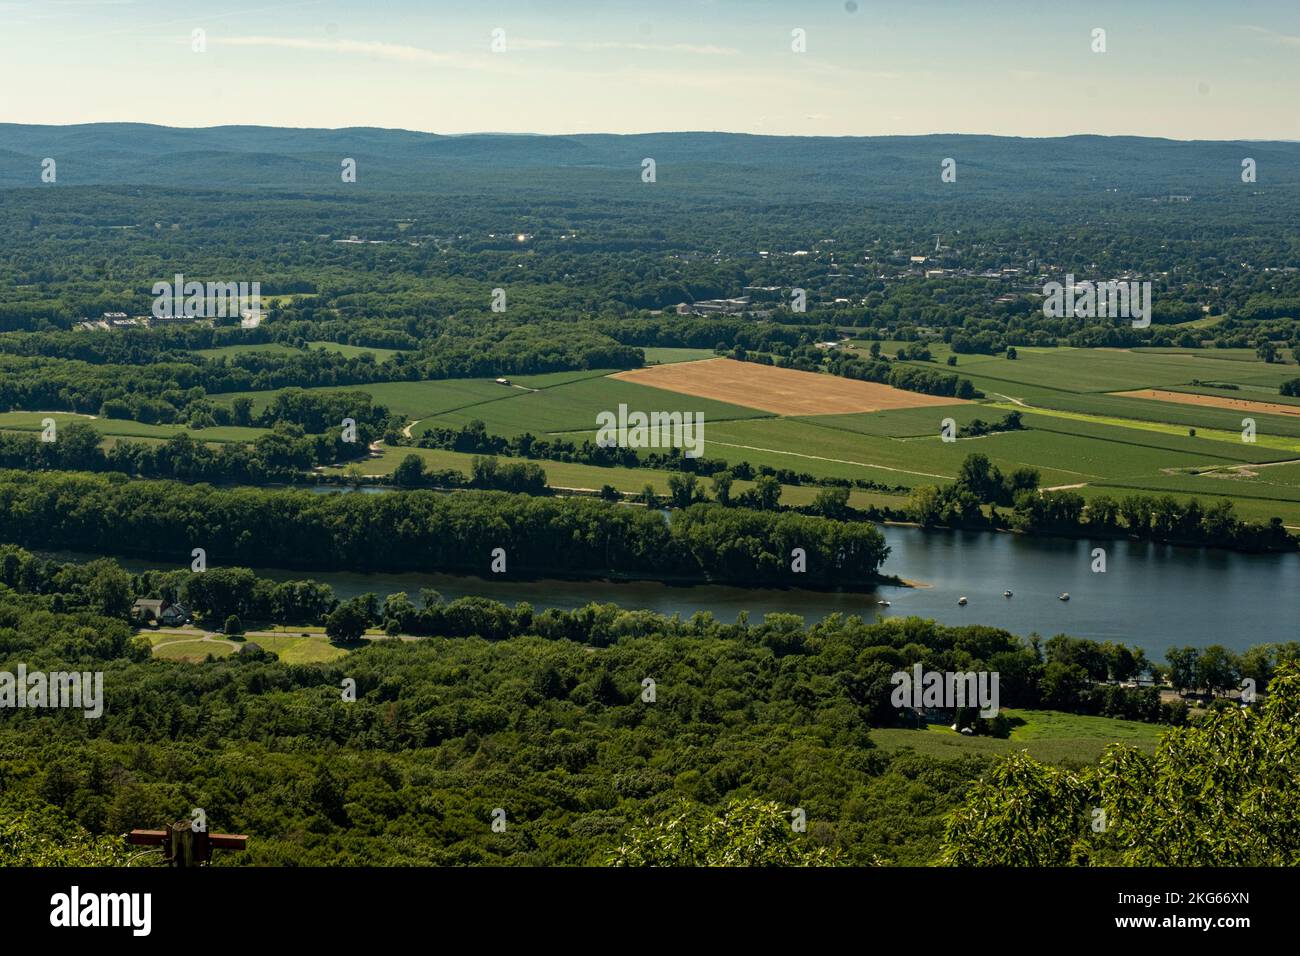 La vista desde la cima del Monte Holyoke en Hadley, Massachusetts Foto de stock